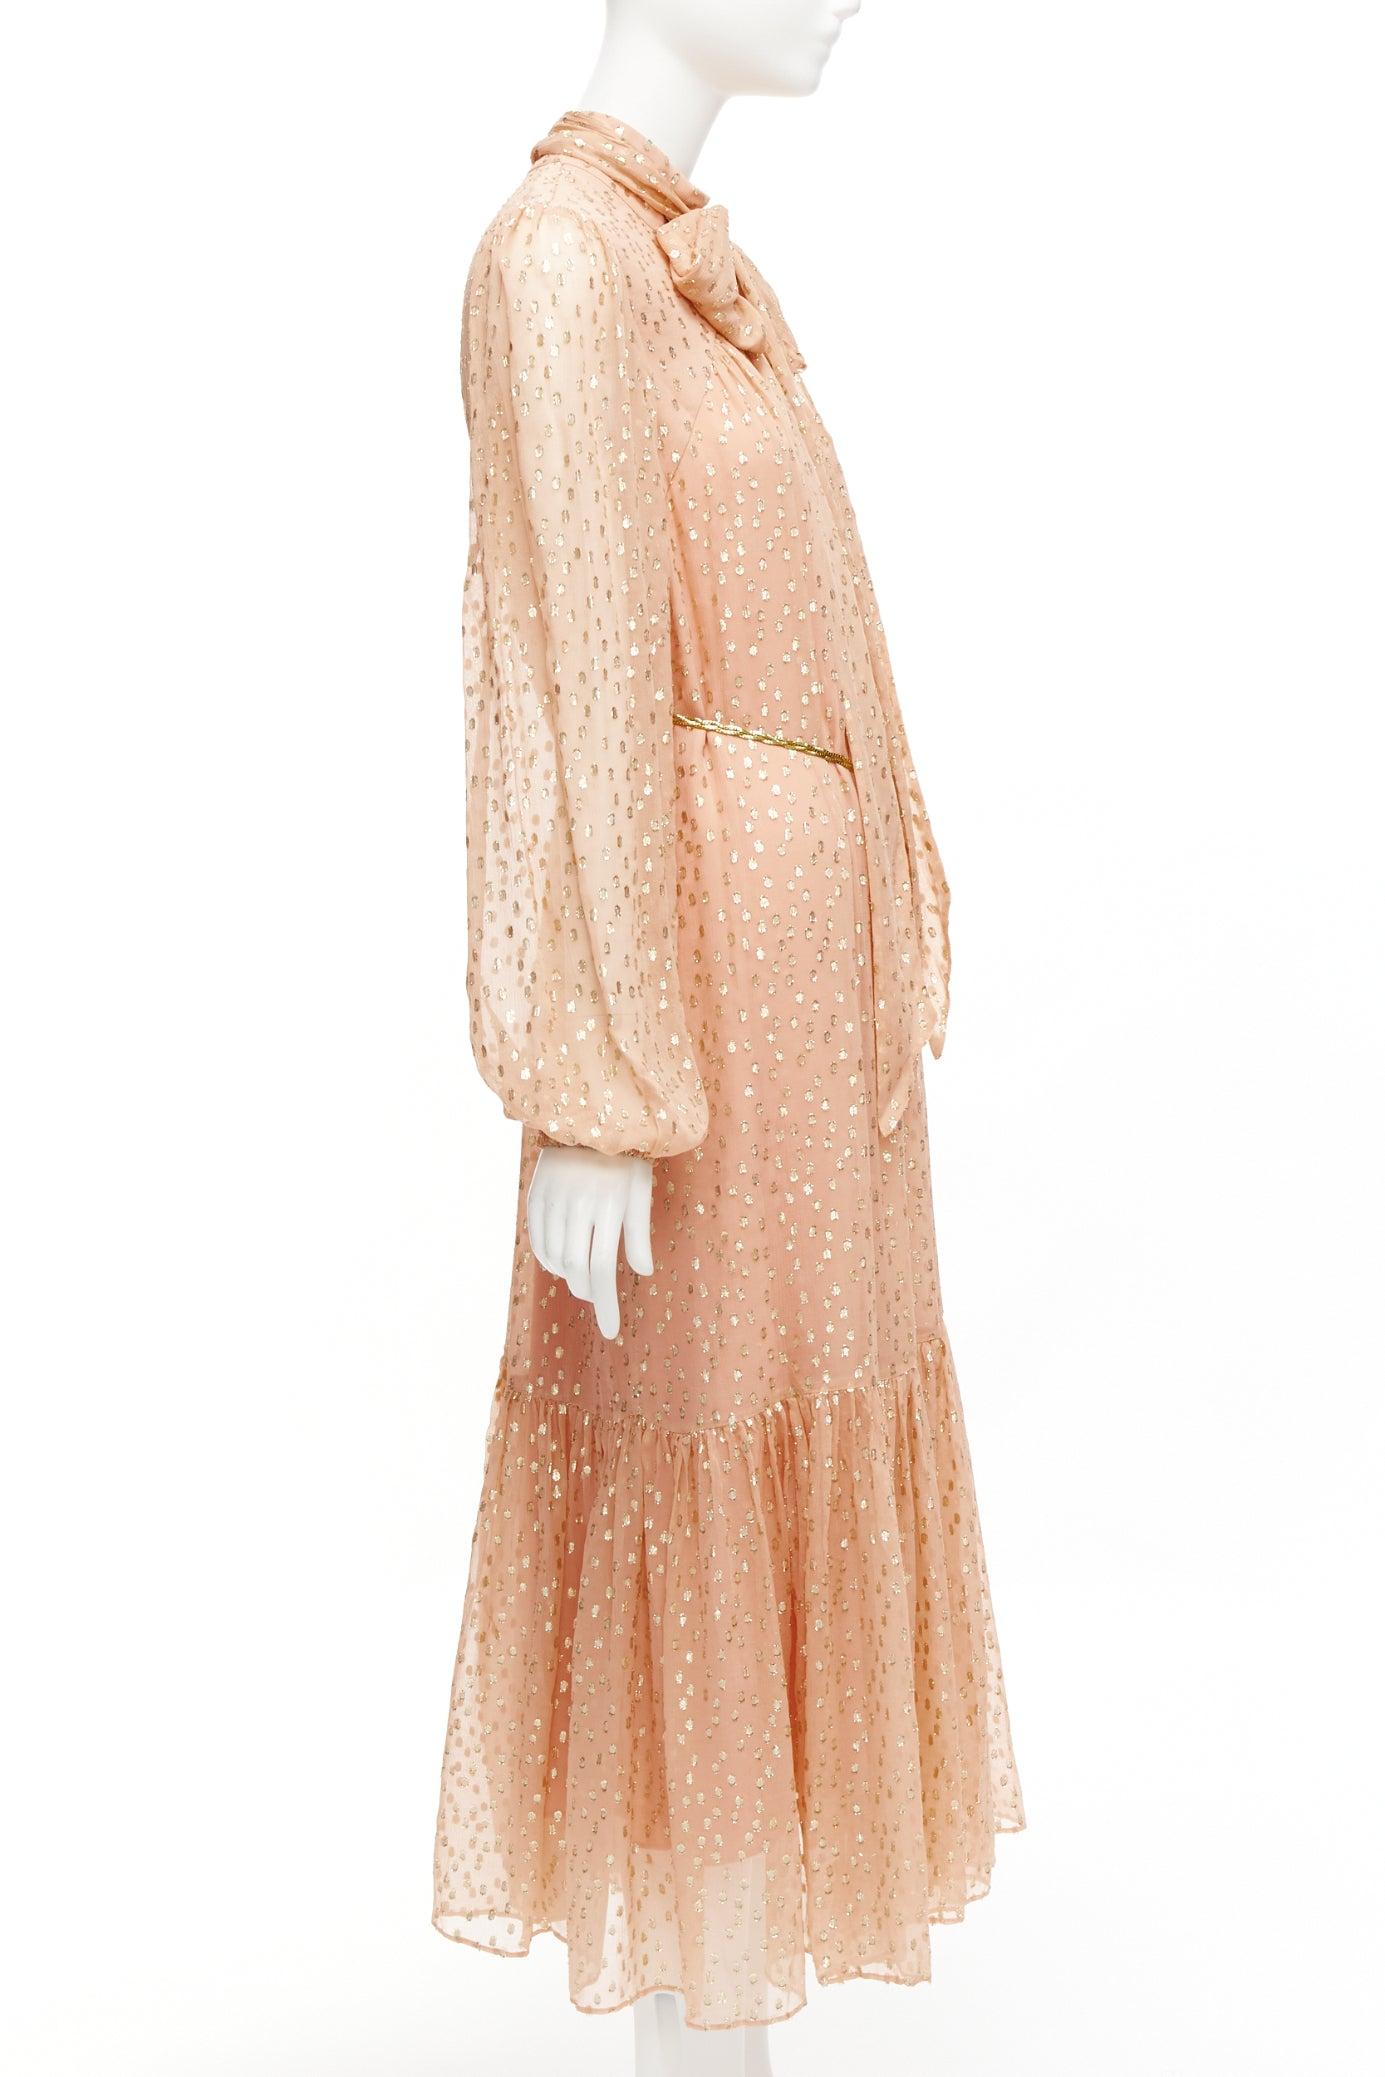 Women's ZIMMERMANN gold silk lurex chiffon bow tie neck ethereal midi dress Size 1 XS For Sale